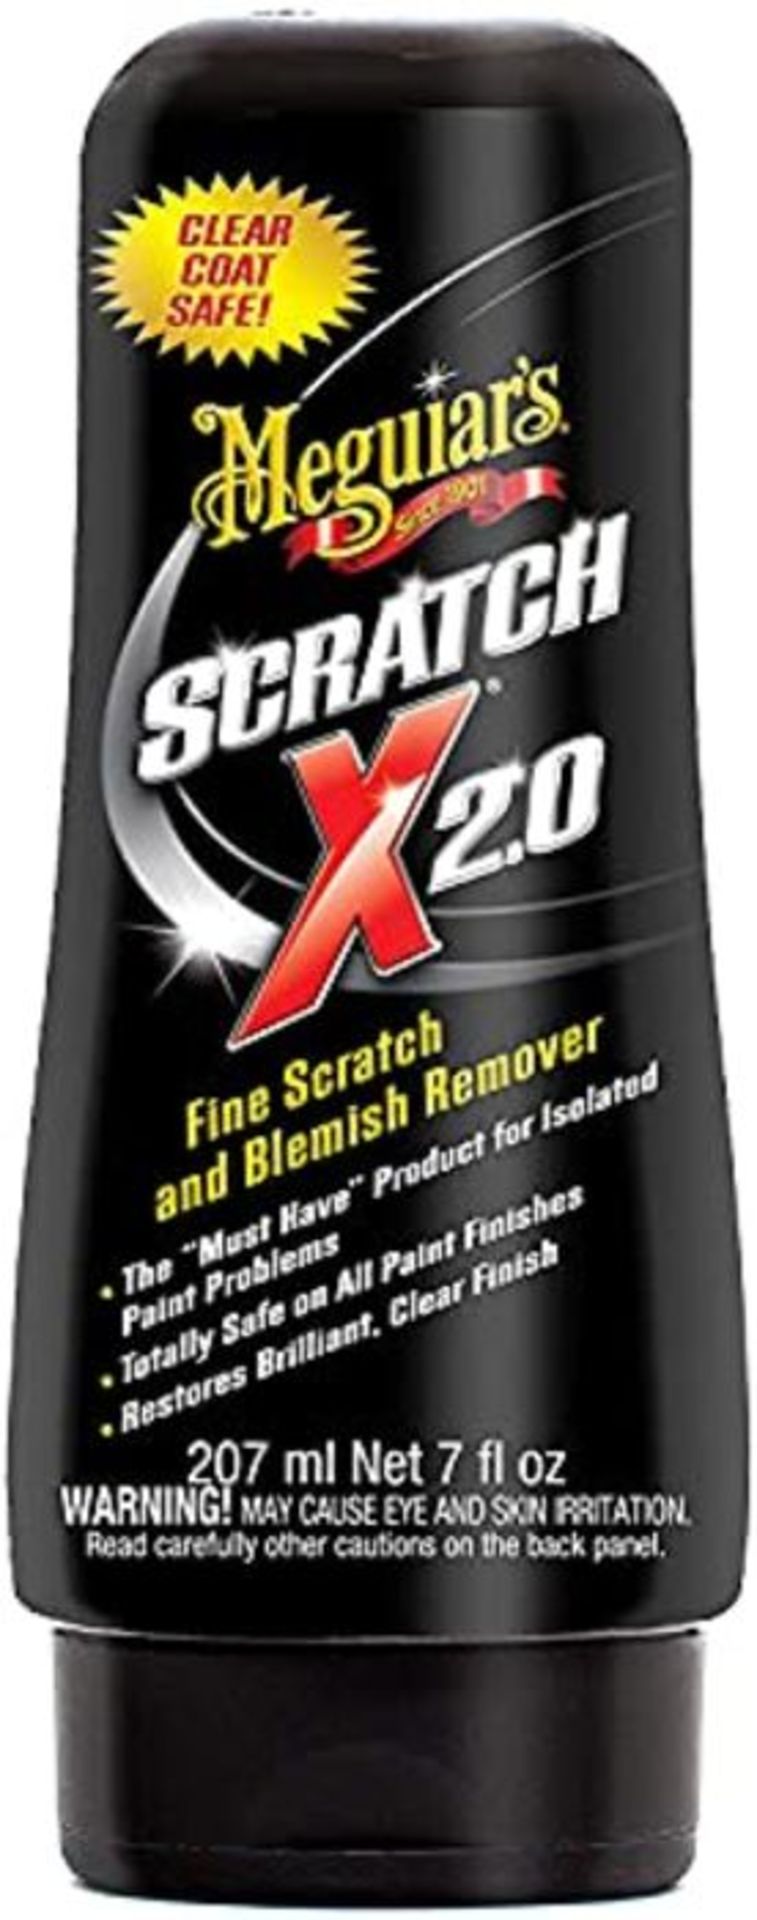 Meguiar's G10307EU ScratchX 2.0 Car Paint Scratch Remover 207ml, Fine scratch and pain